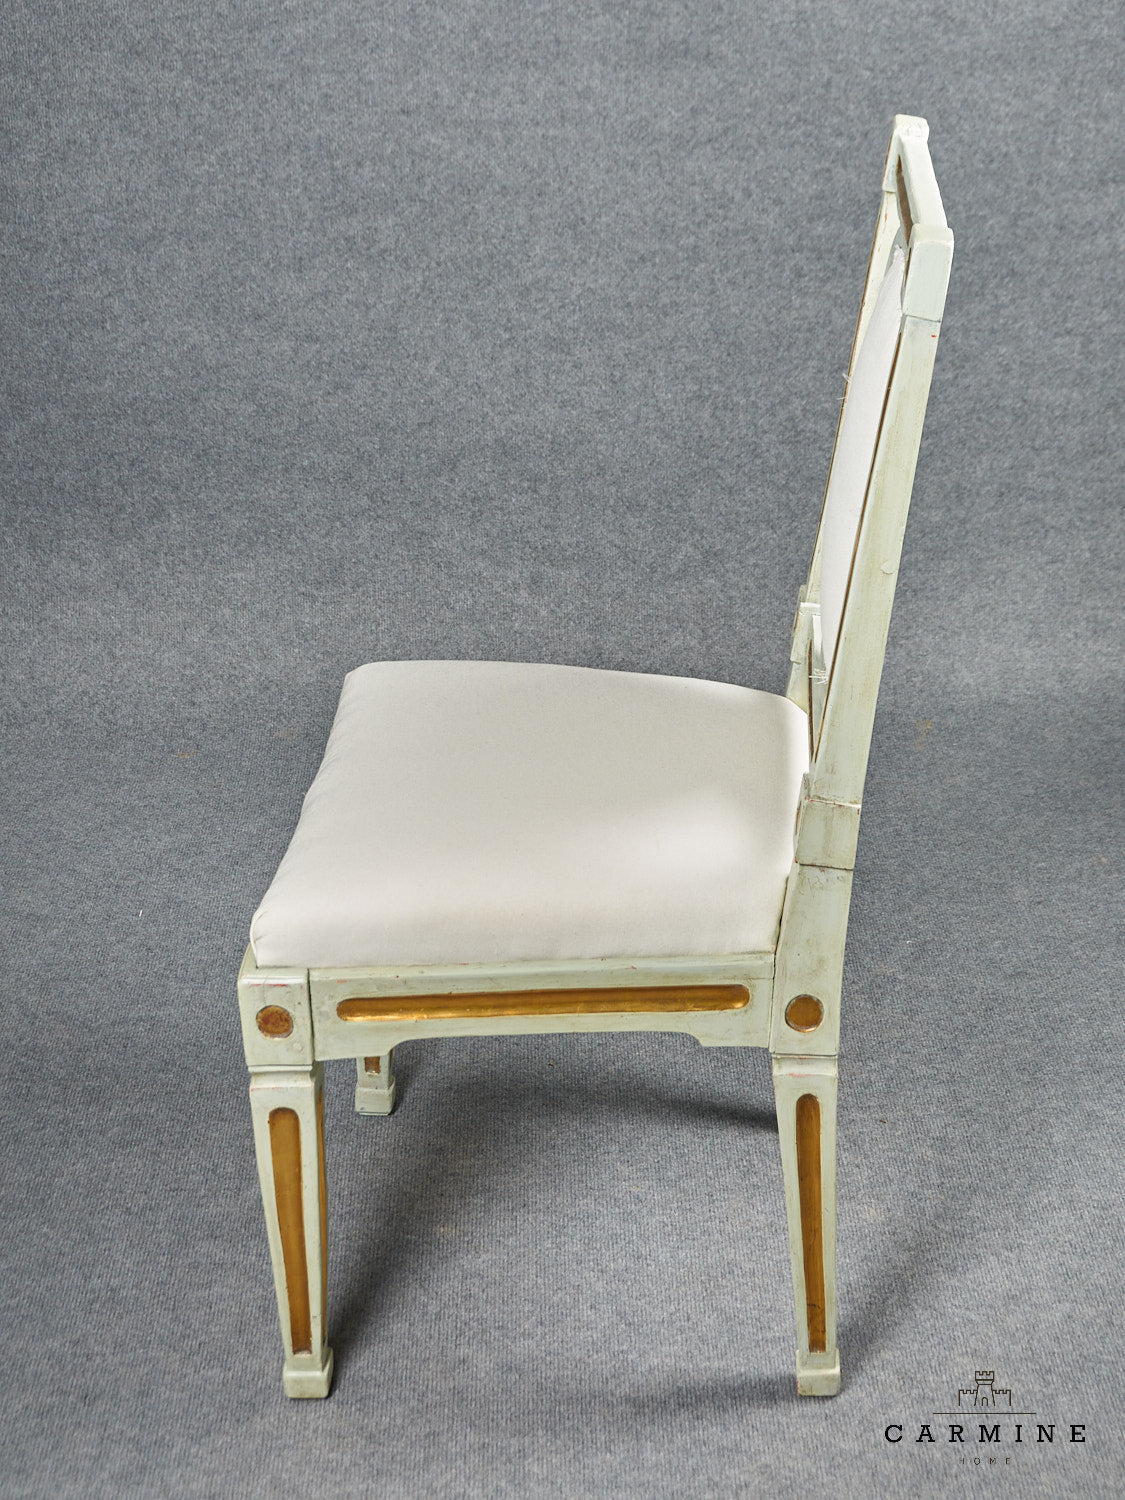 Directoire chair, South German around 1795